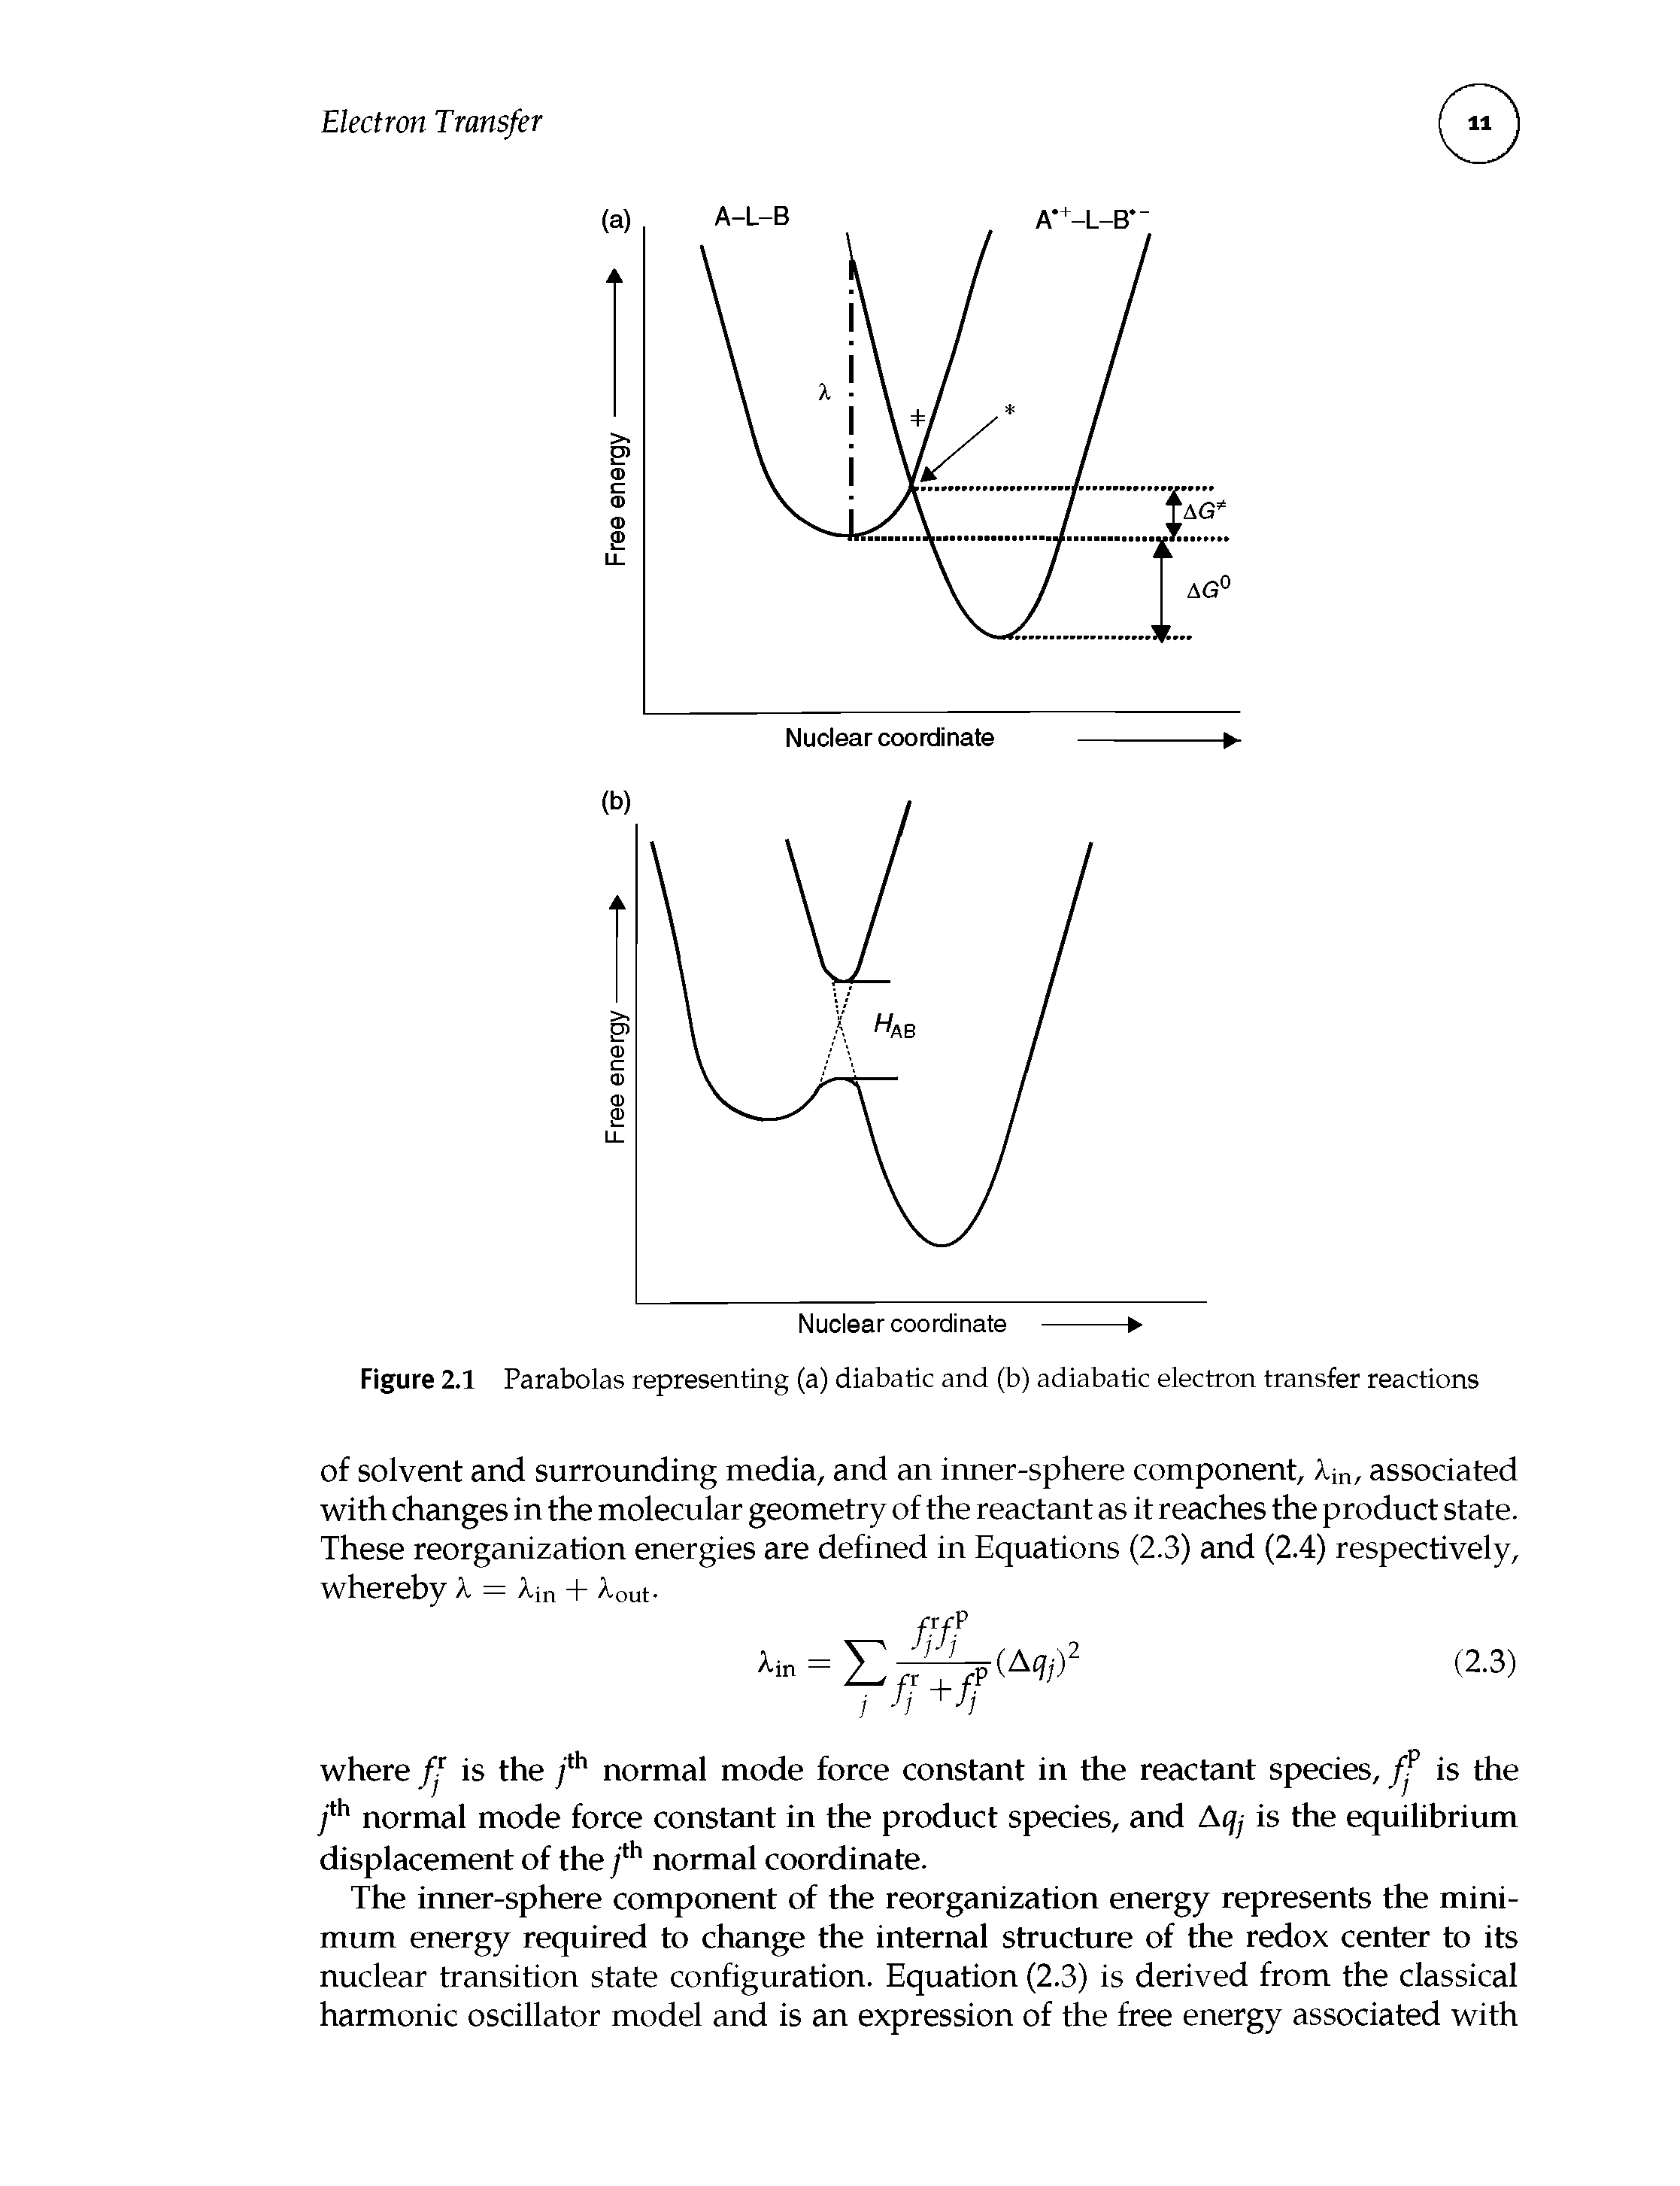 Figure 2.1 Parabolas representing (a) diabatic and (b) adiabatic electron transfer reactions...